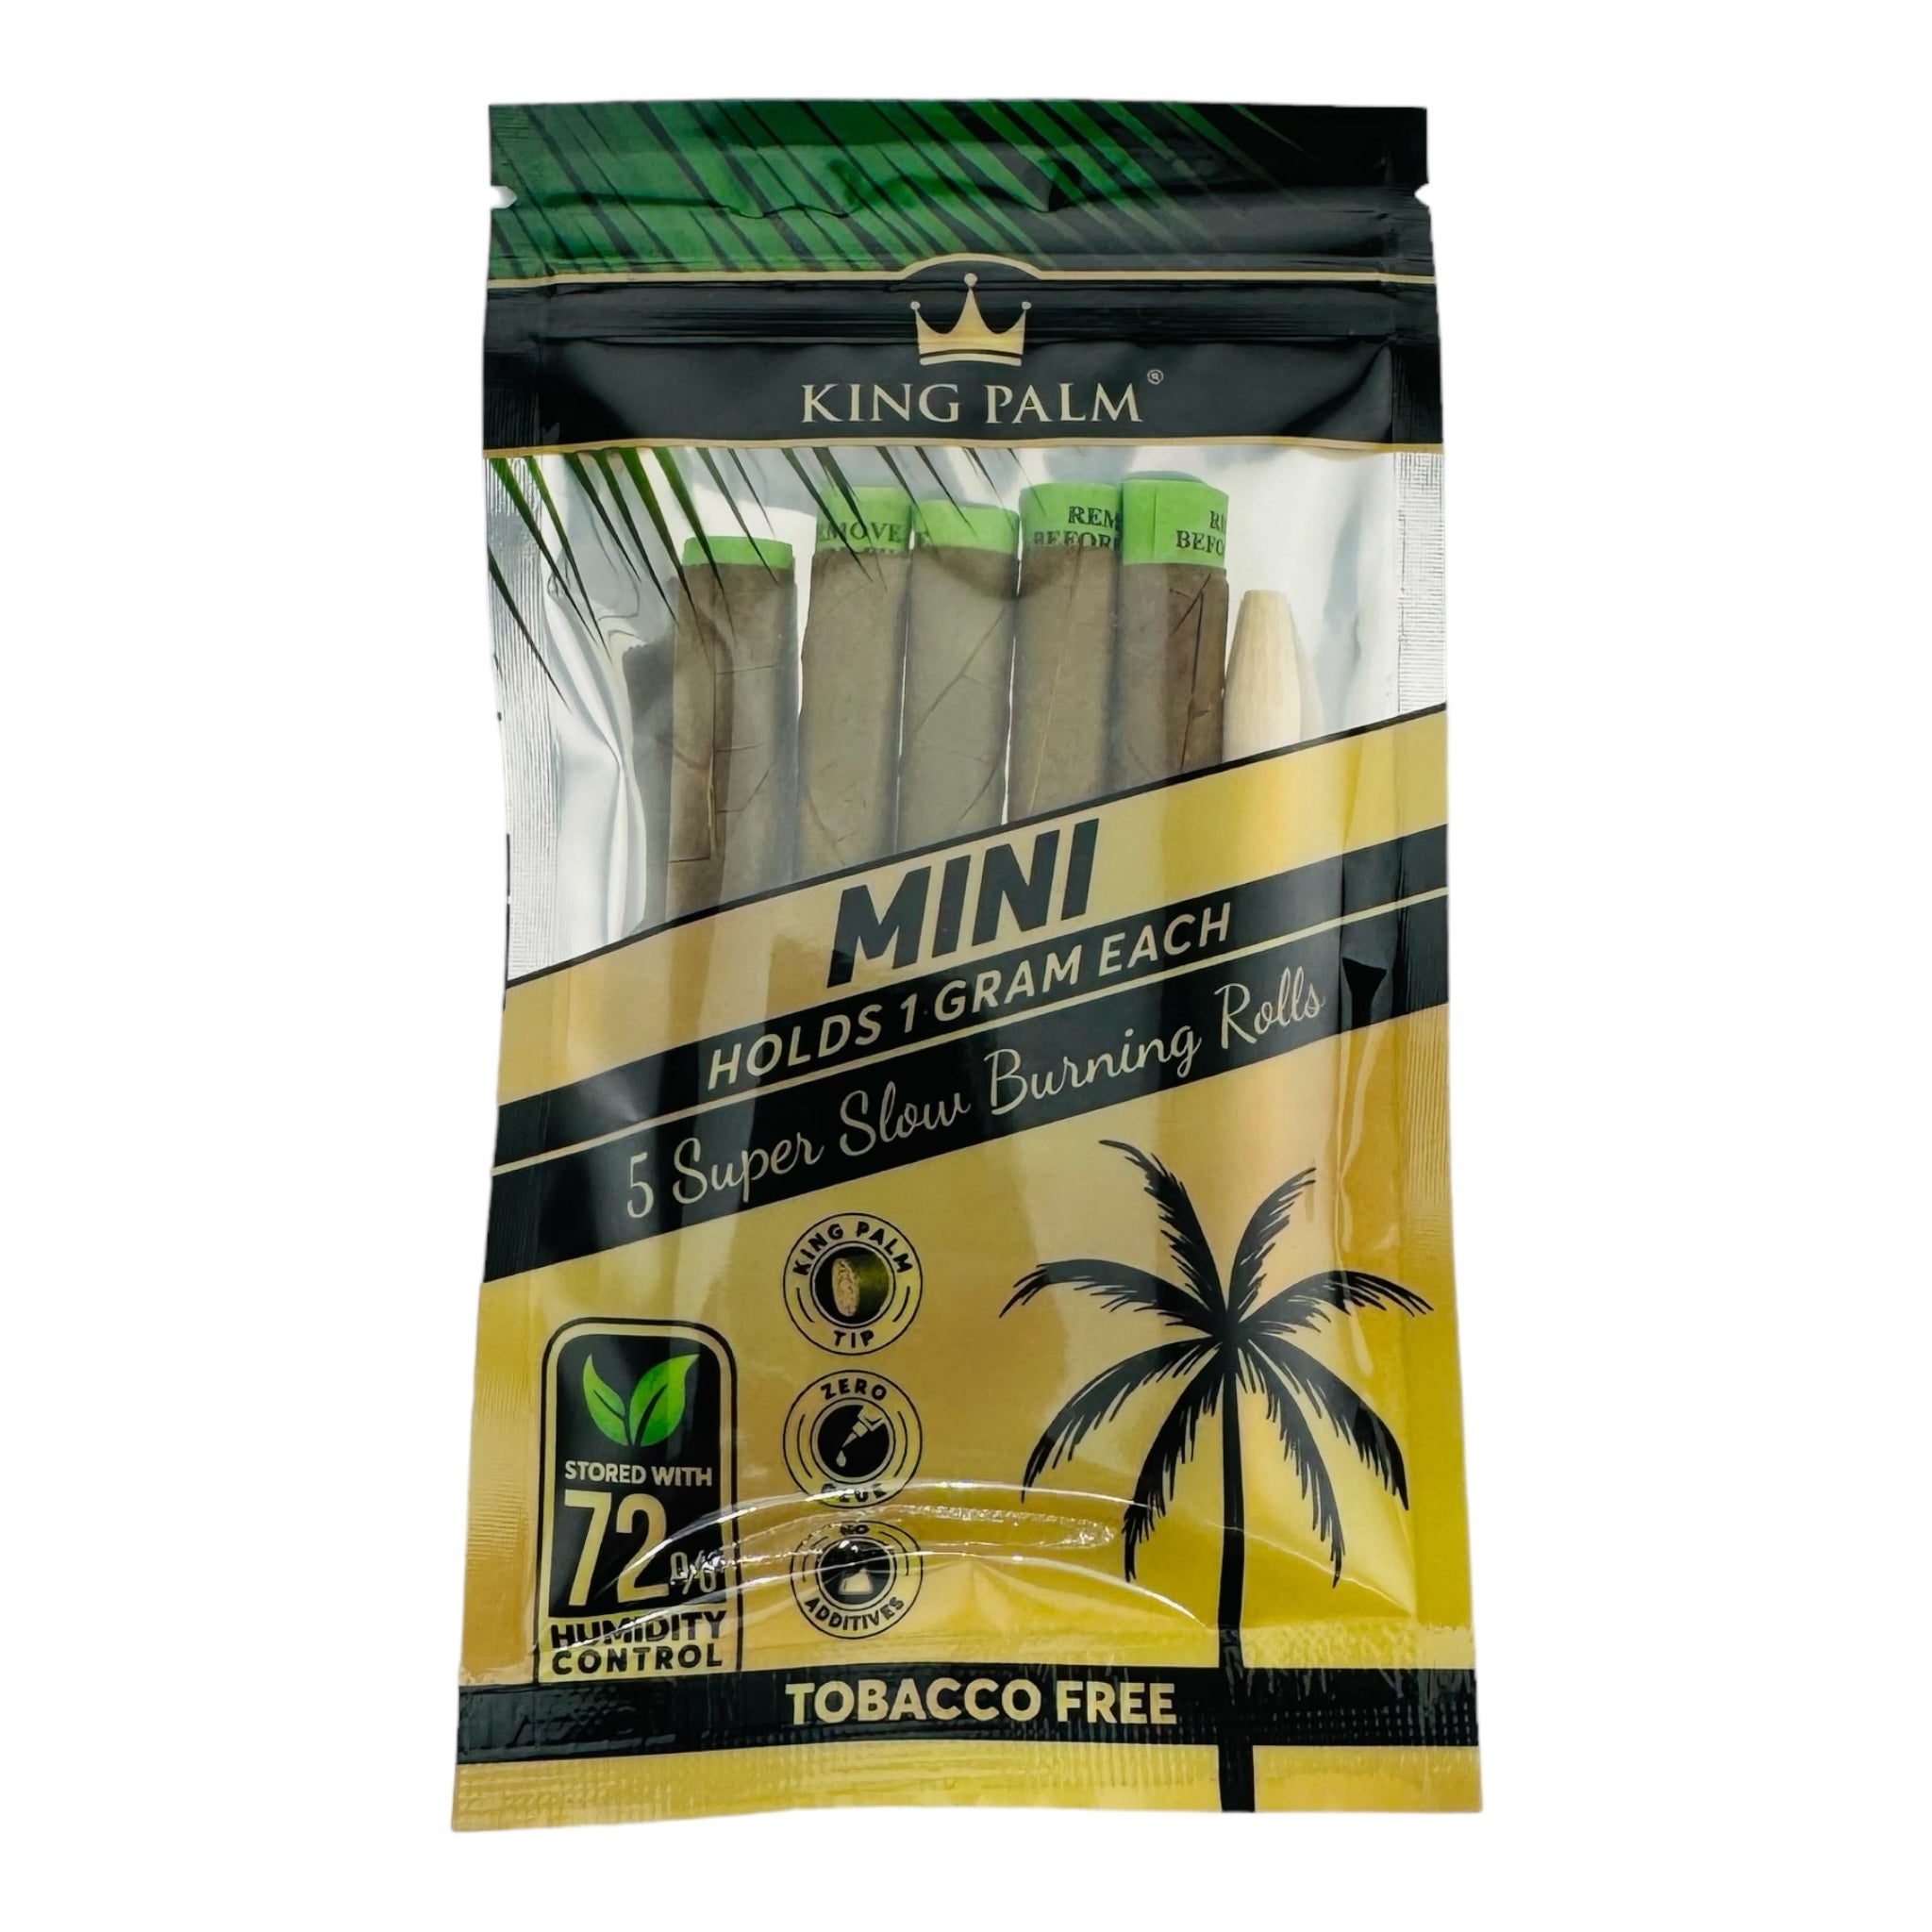 King palm wraps 5ct mini for sale